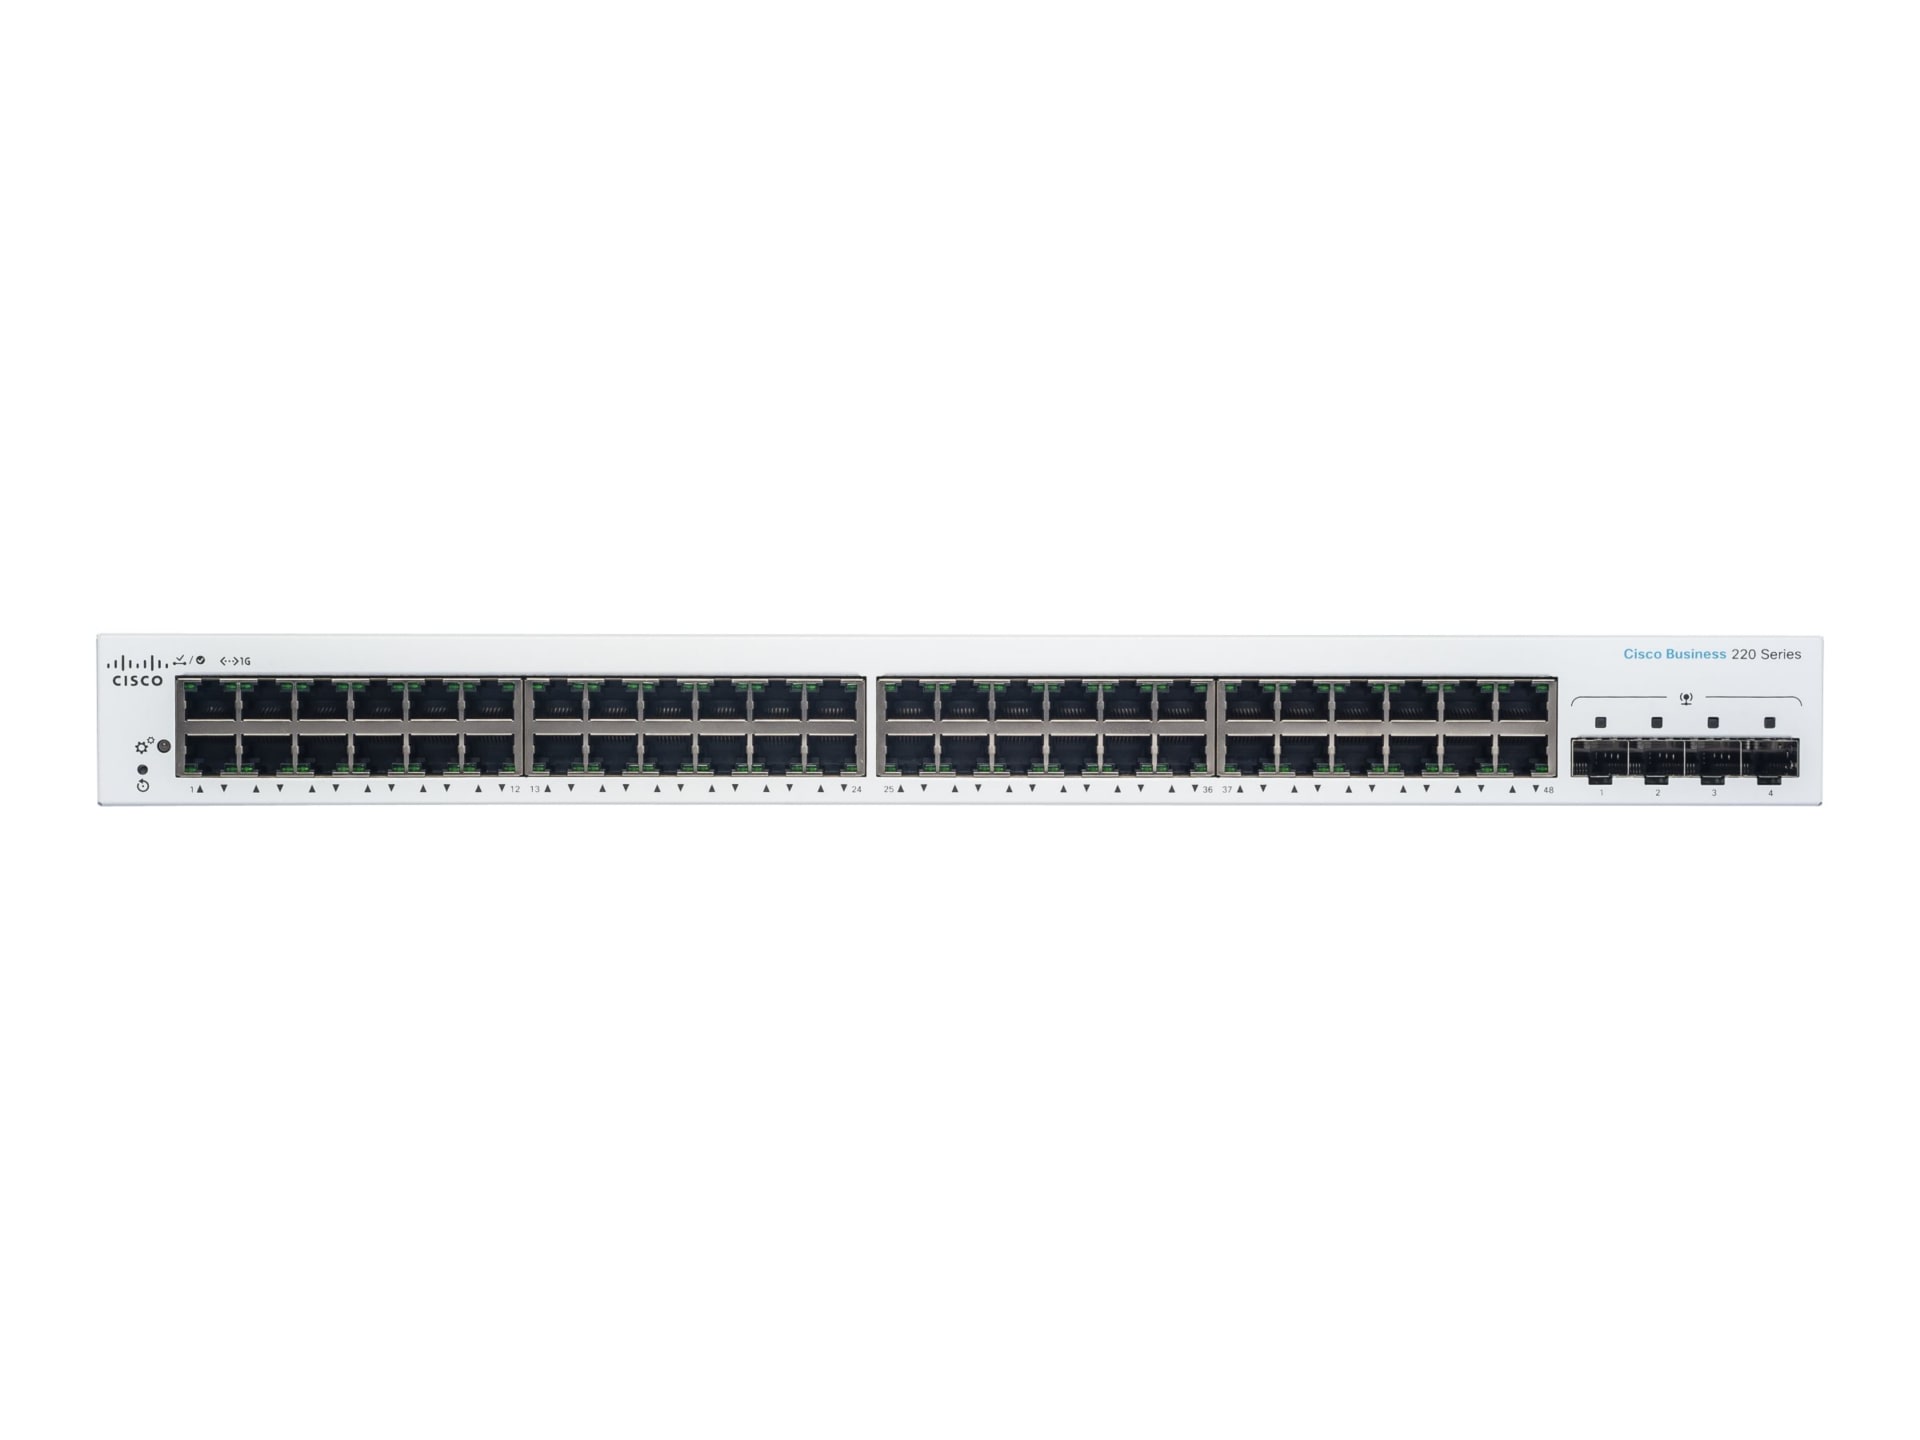 Cisco Business 220 Series 48-Port Smart Switch